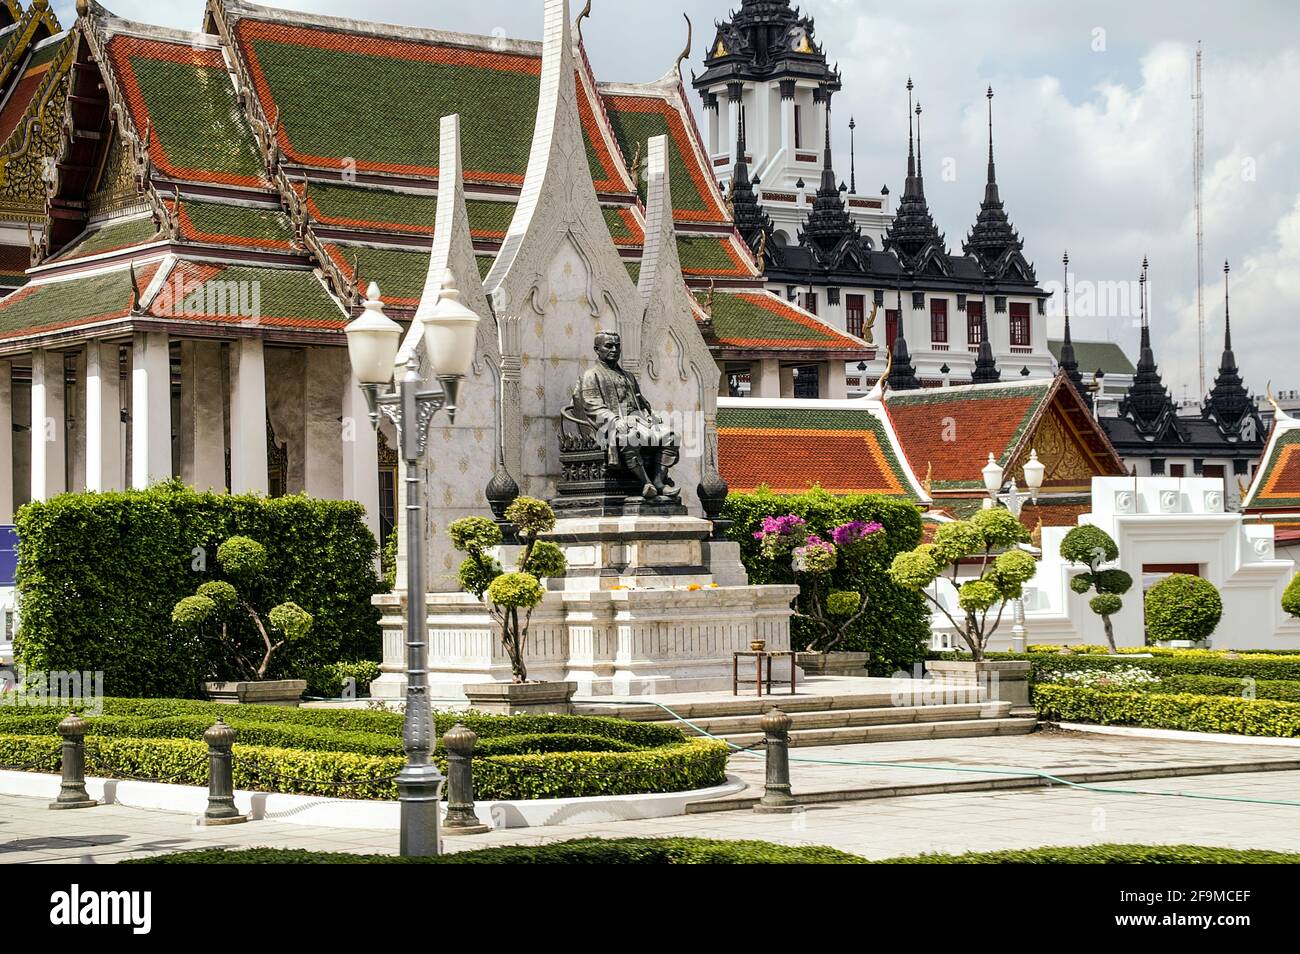 Statue de Rama III Grand Palais; พระบรมมหาราชวัง. Bangkok, Thaïlande Banque D'Images